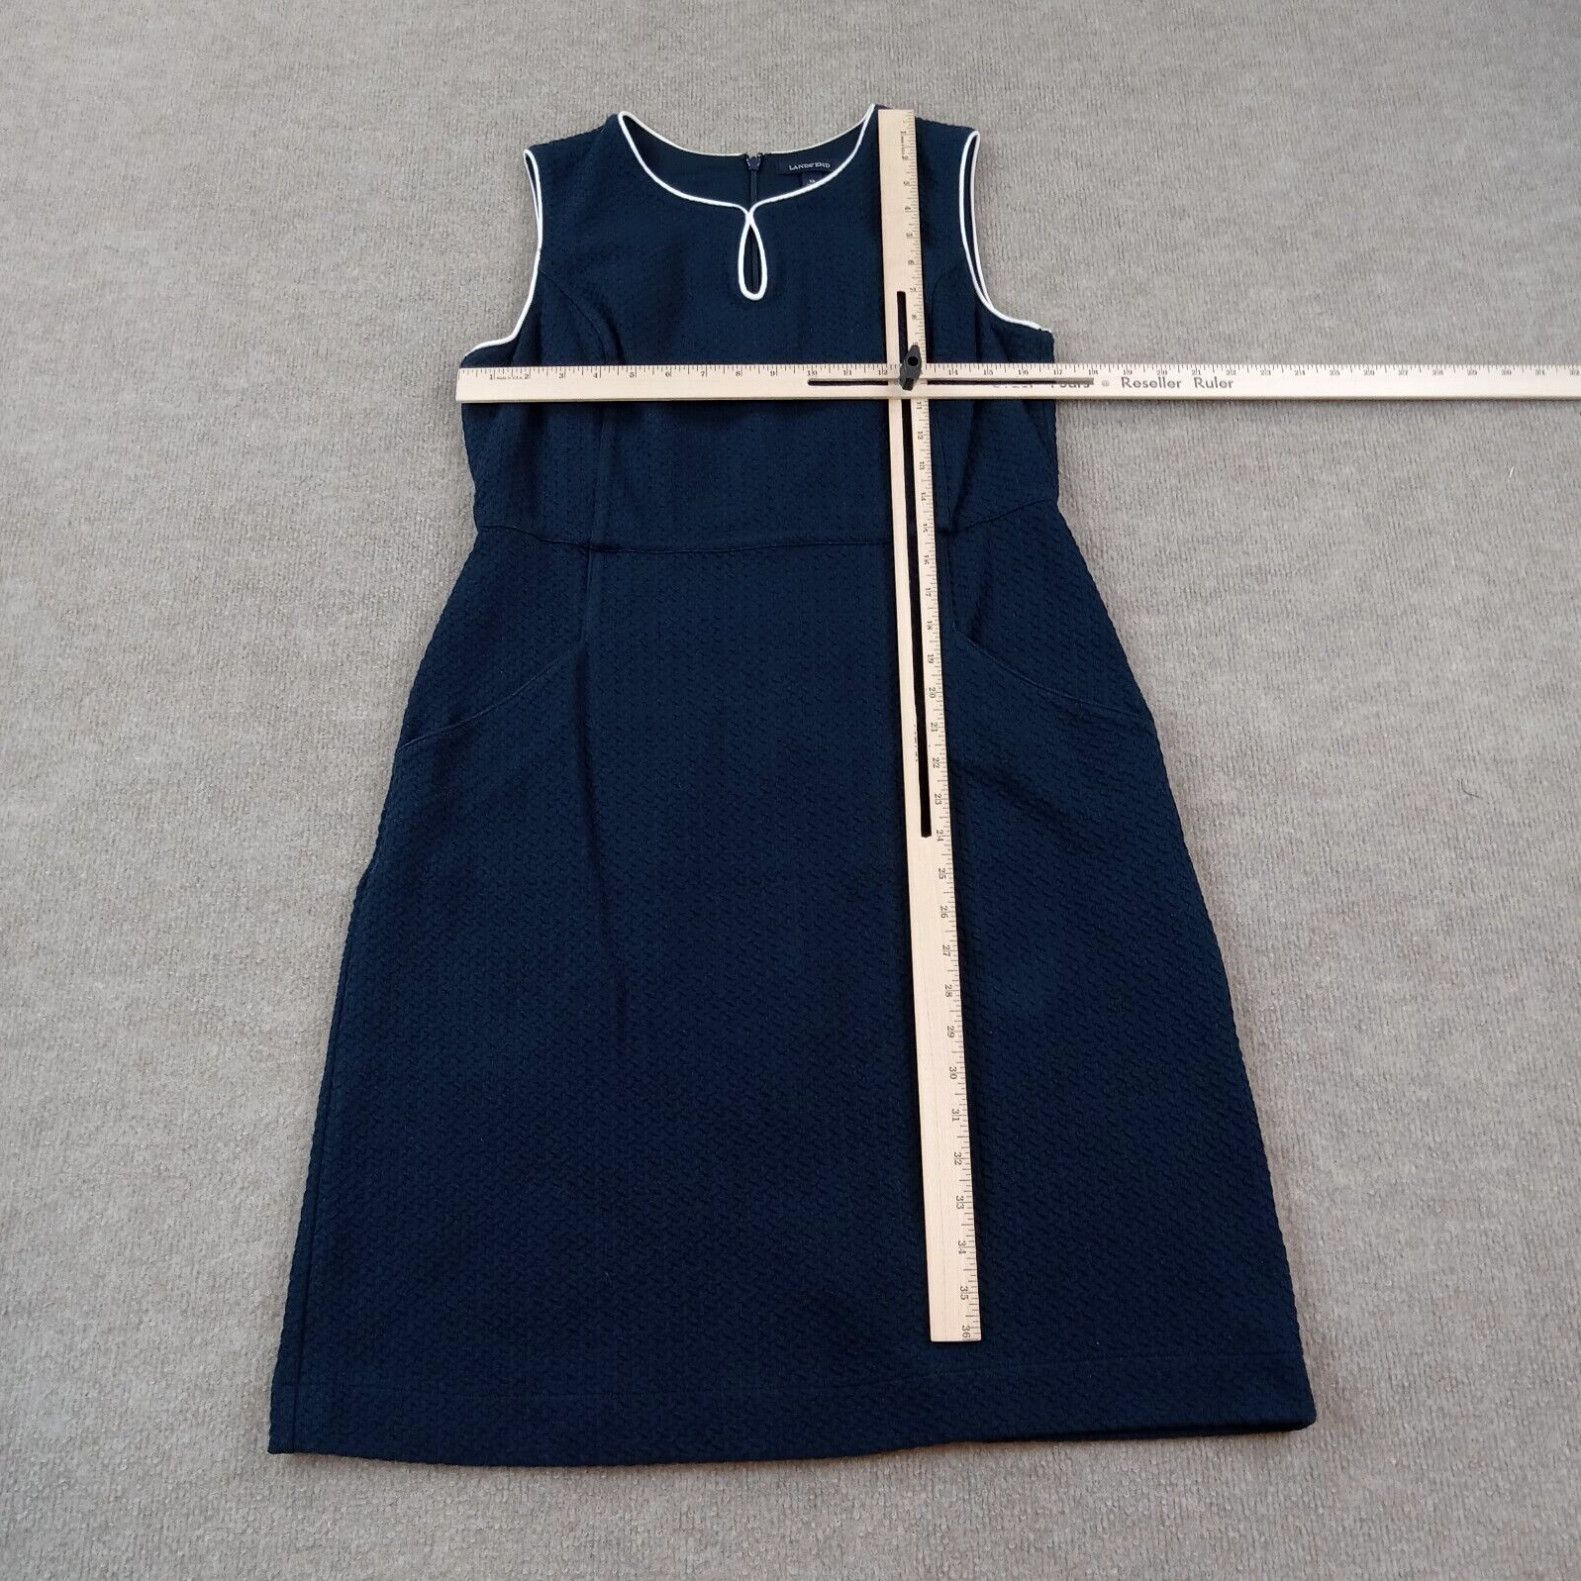 Vintage Lands Ends Dress Women Size 12 Blue Shift Short Sleeve Stretch Casual Size XL / US 12-14 / IT 48-50 - 2 Preview